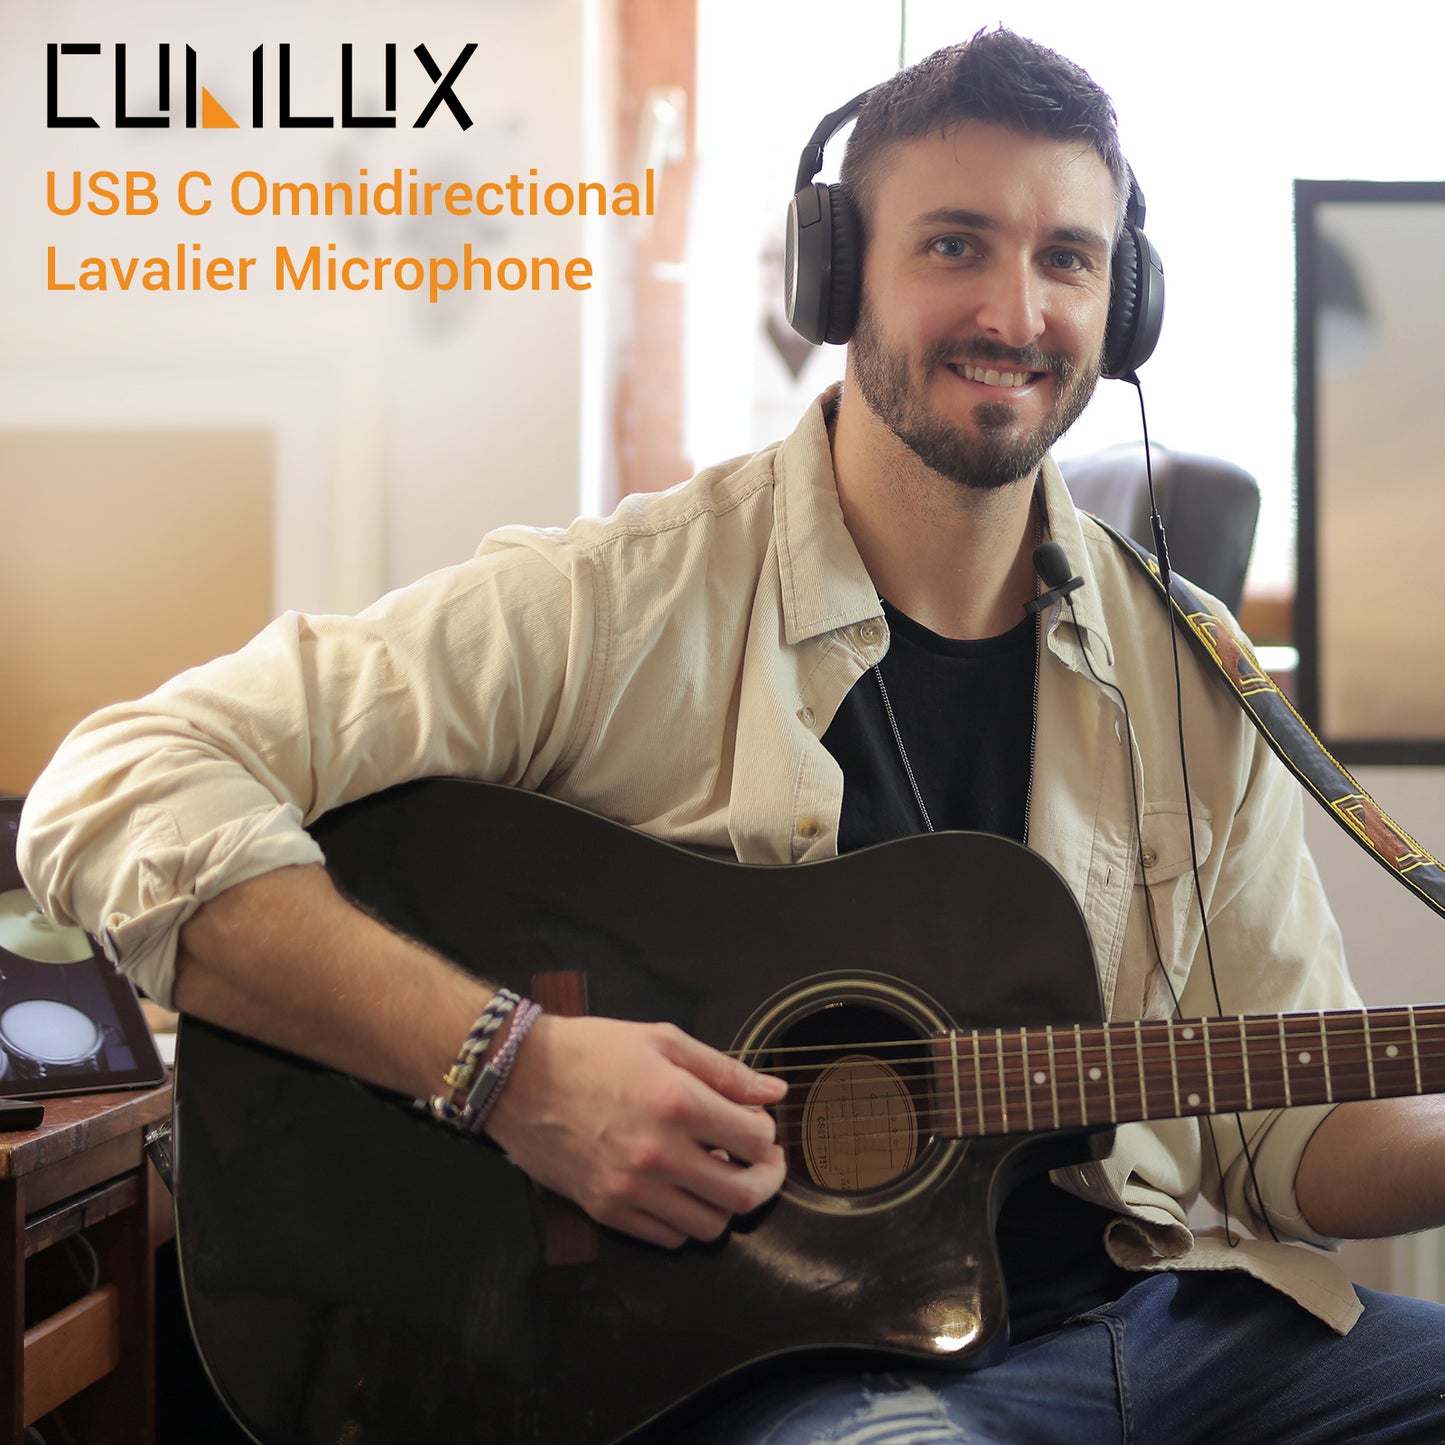 USB C Omnidirectional Lavalier Microphone,MLC-14